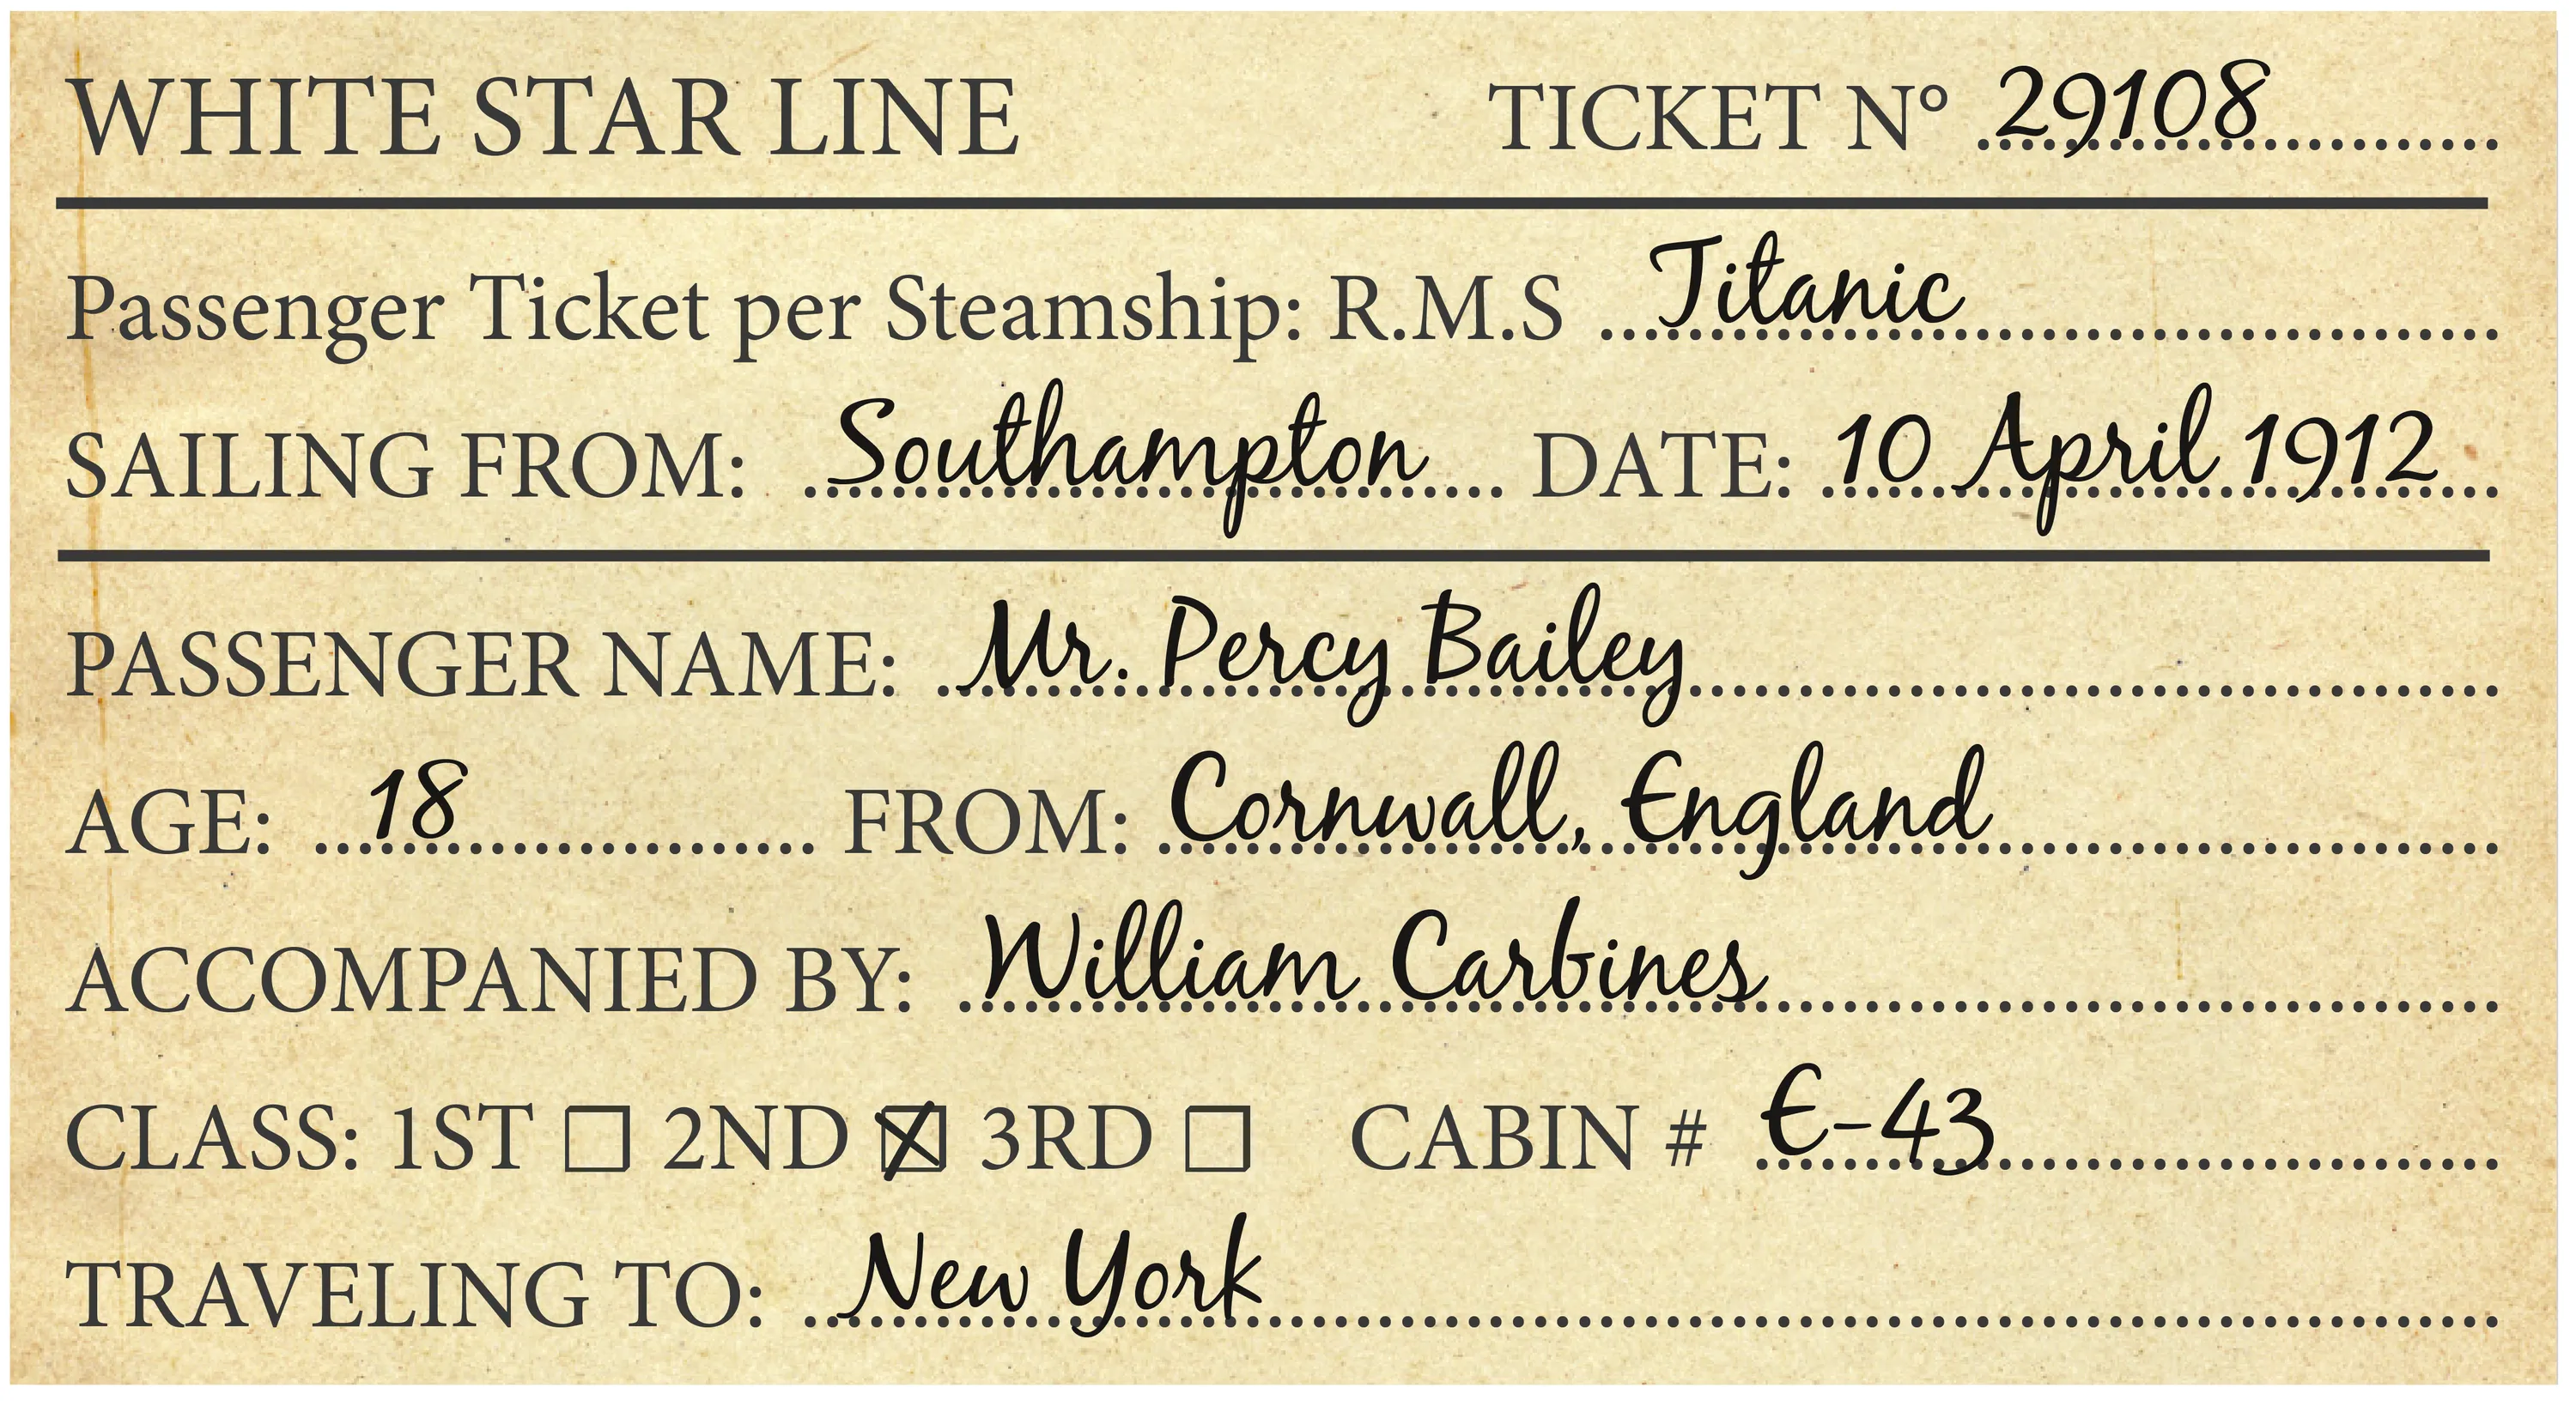 Passenger ticket